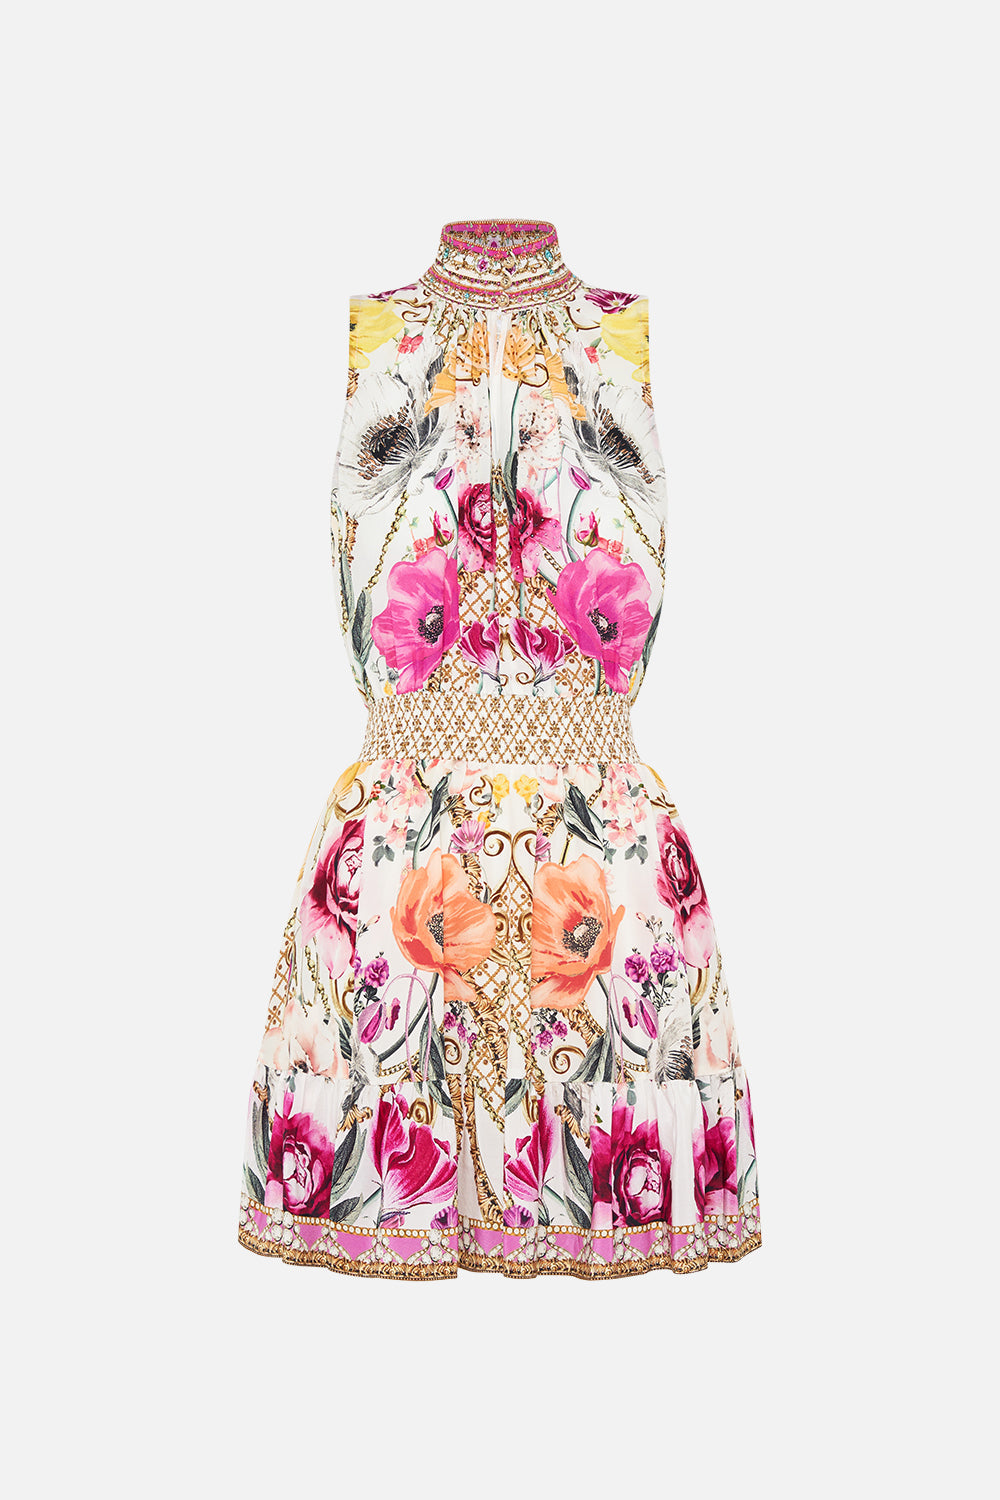 Product view CAMILLA floral mini dress in Destiny Calling print